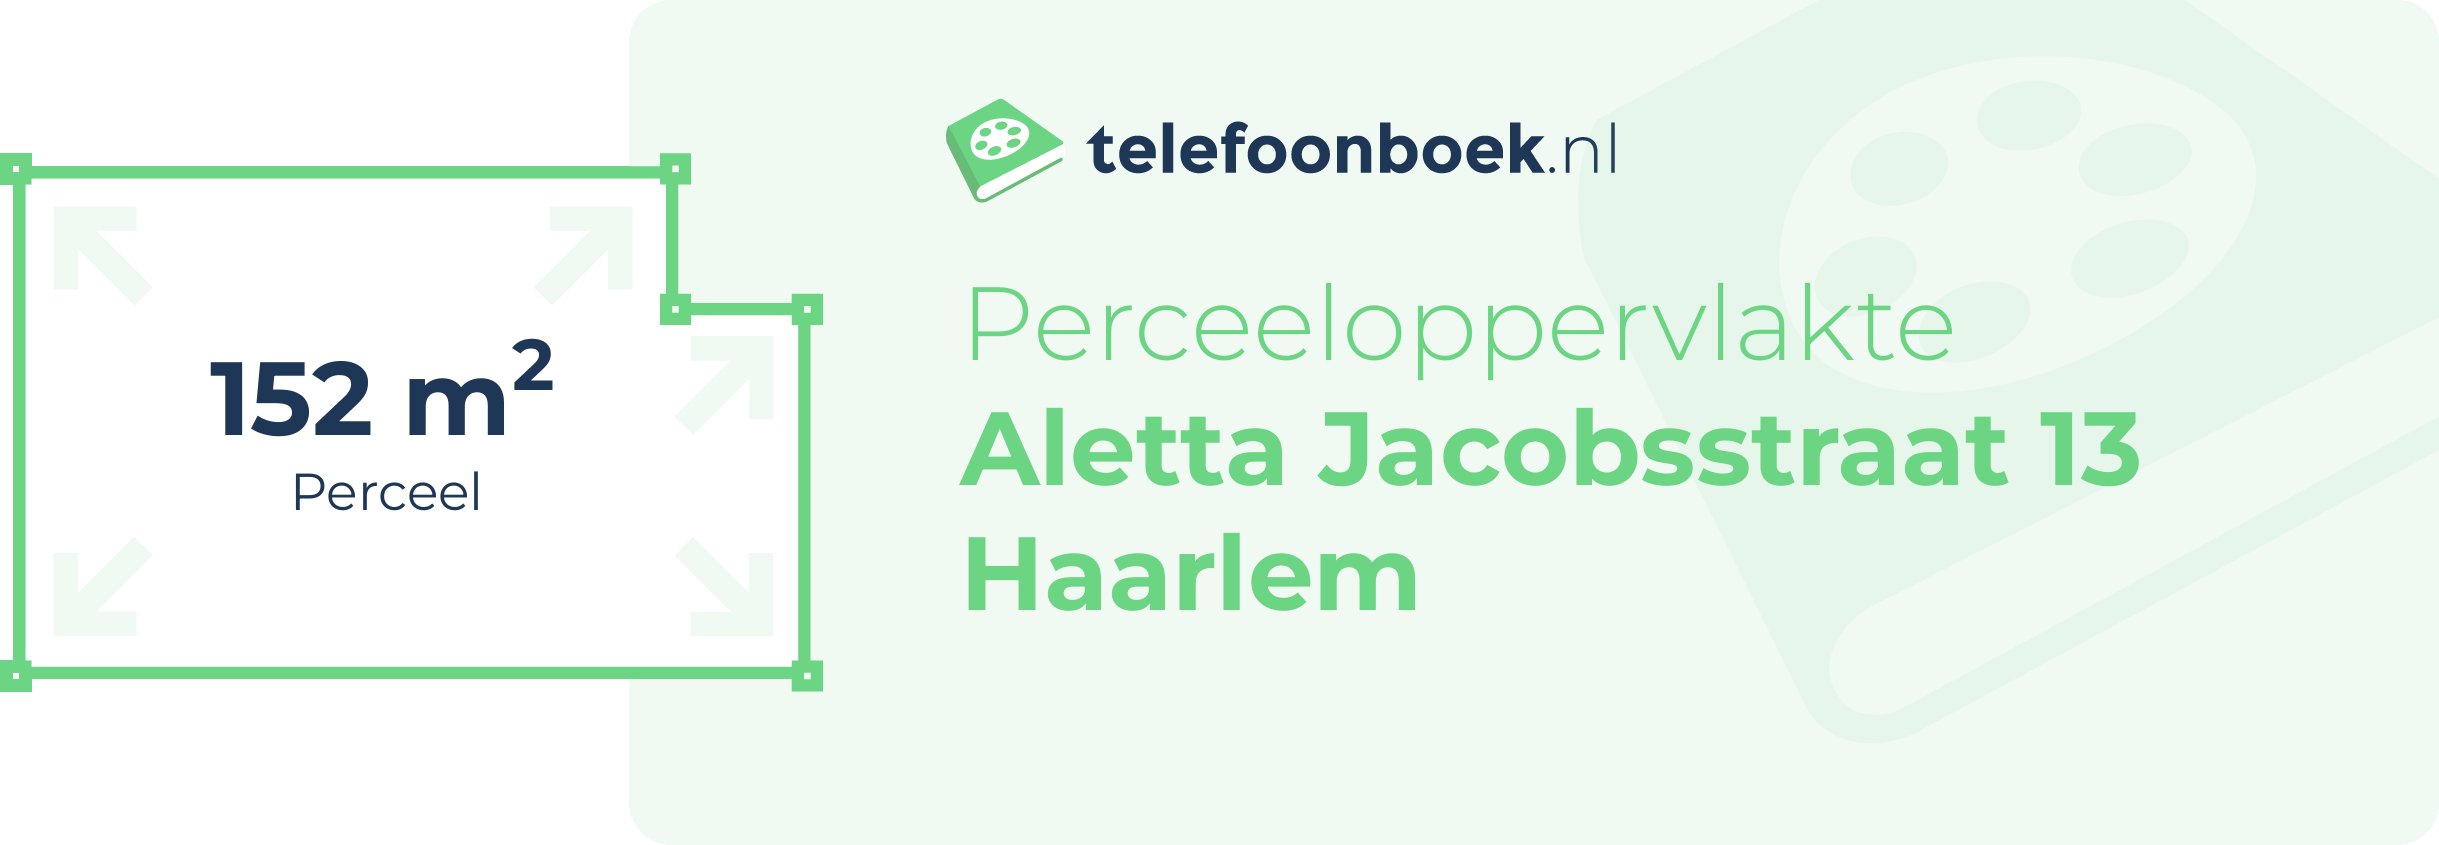 Perceeloppervlakte Aletta Jacobsstraat 13 Haarlem